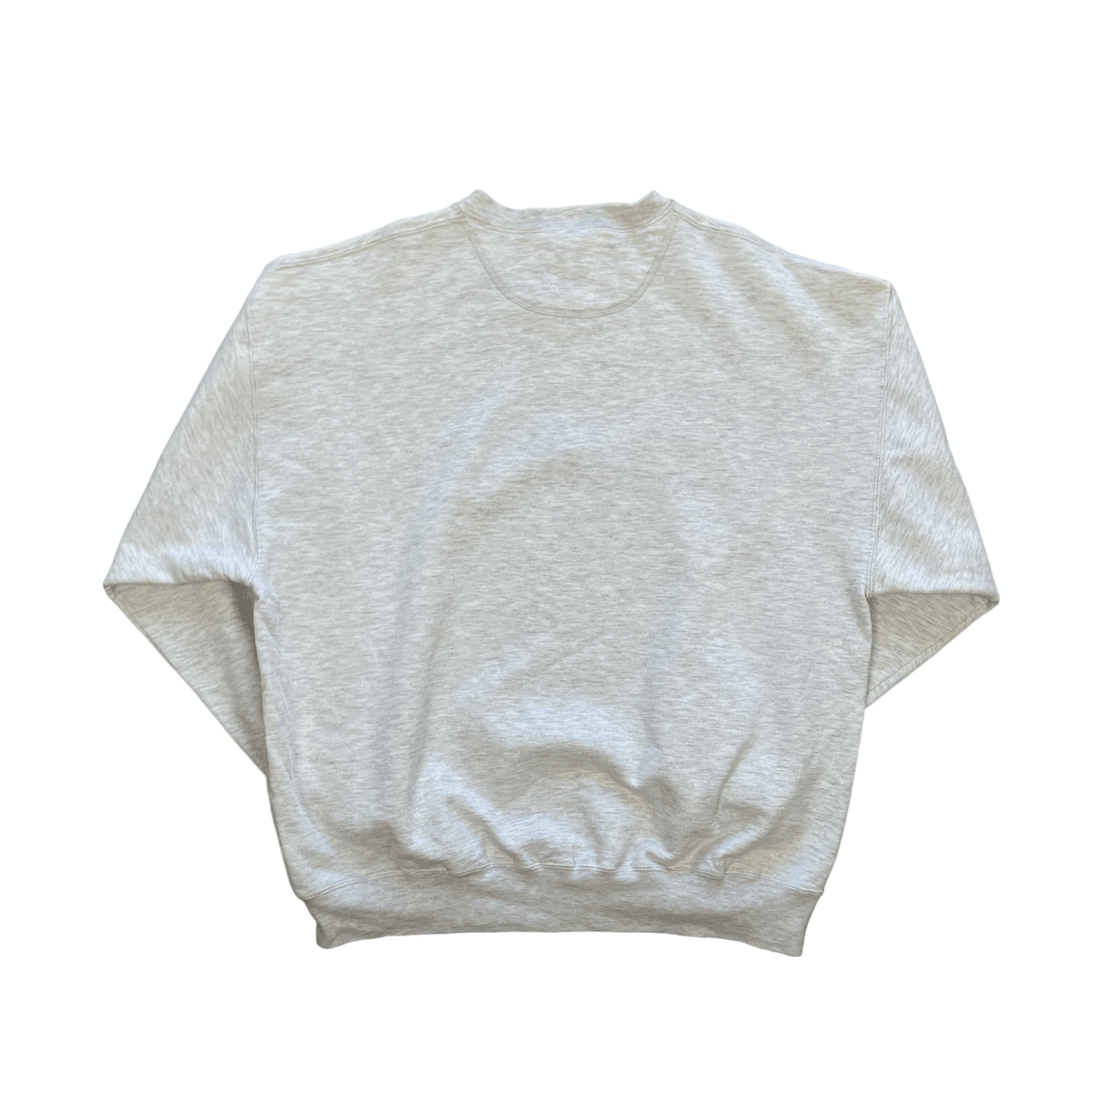 Vintage 90s Grey Timberland Sweatshirt - Extra Large - The Streetwear Studio